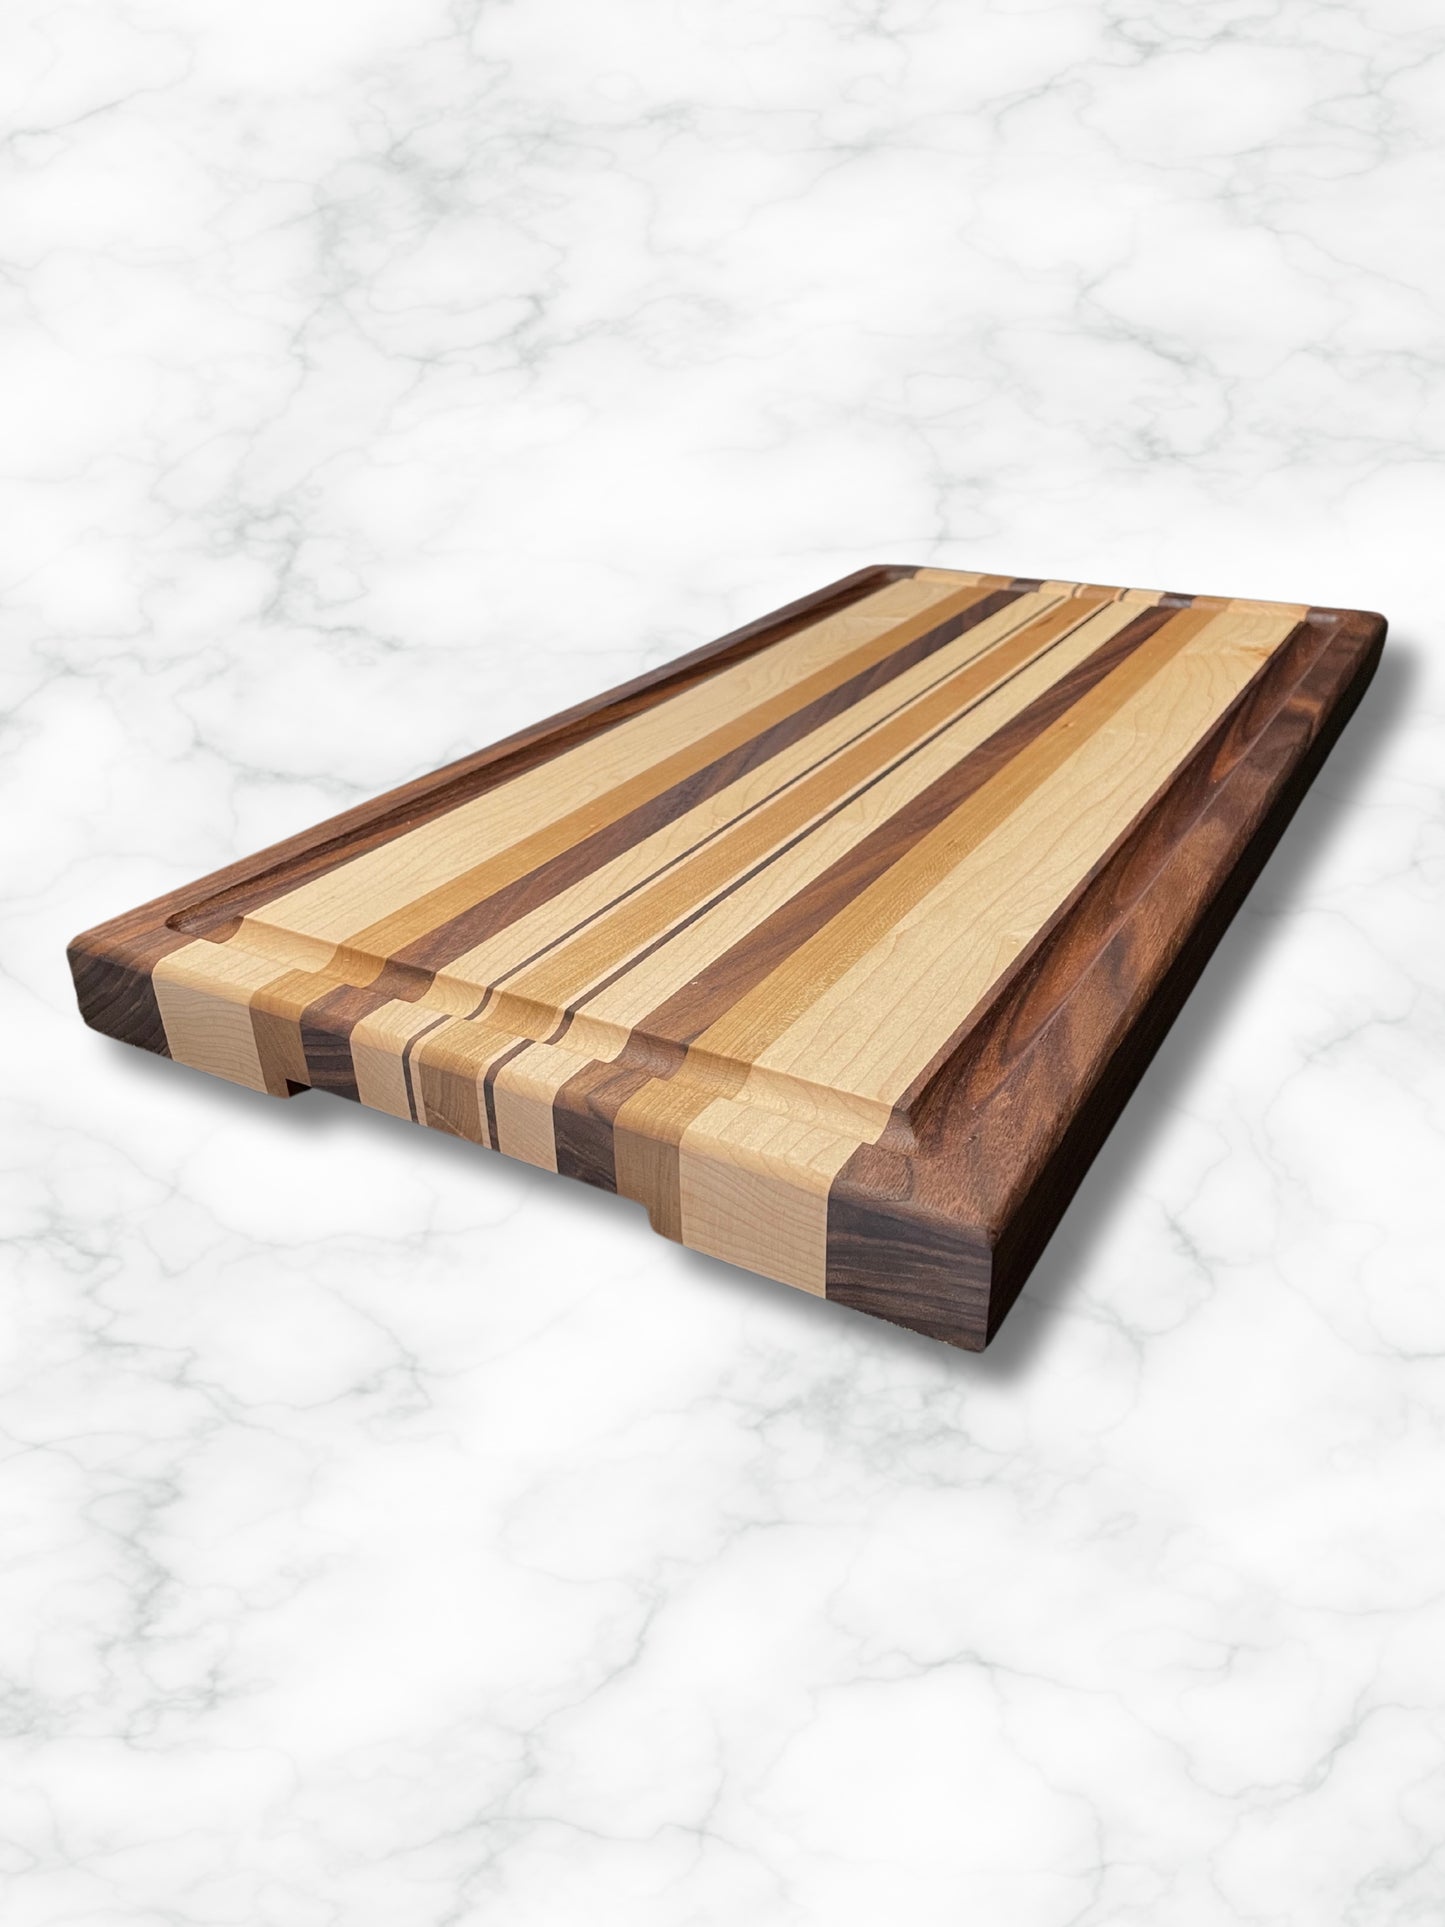 custom handmade long edge grain cutting board wood walnut maple cherry, side view